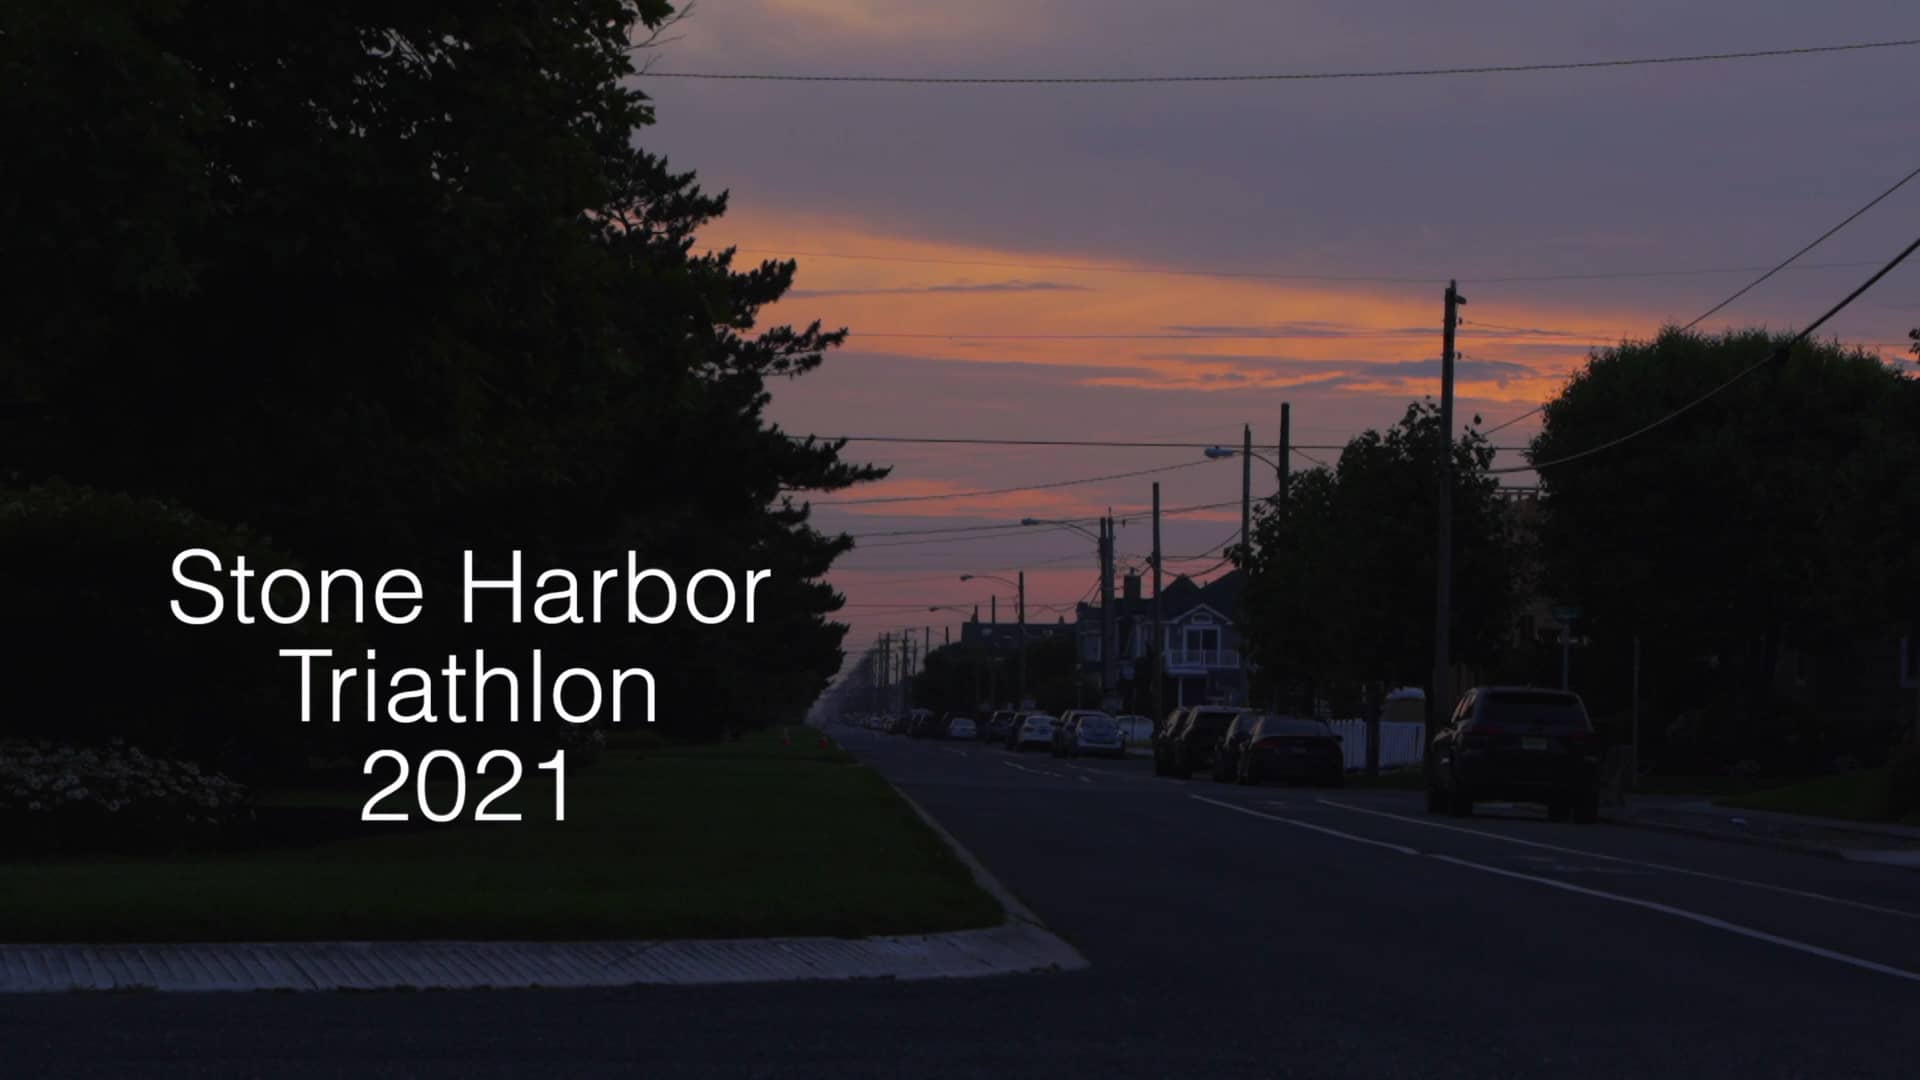 Stone Harbor Triathlon 2021 on Vimeo